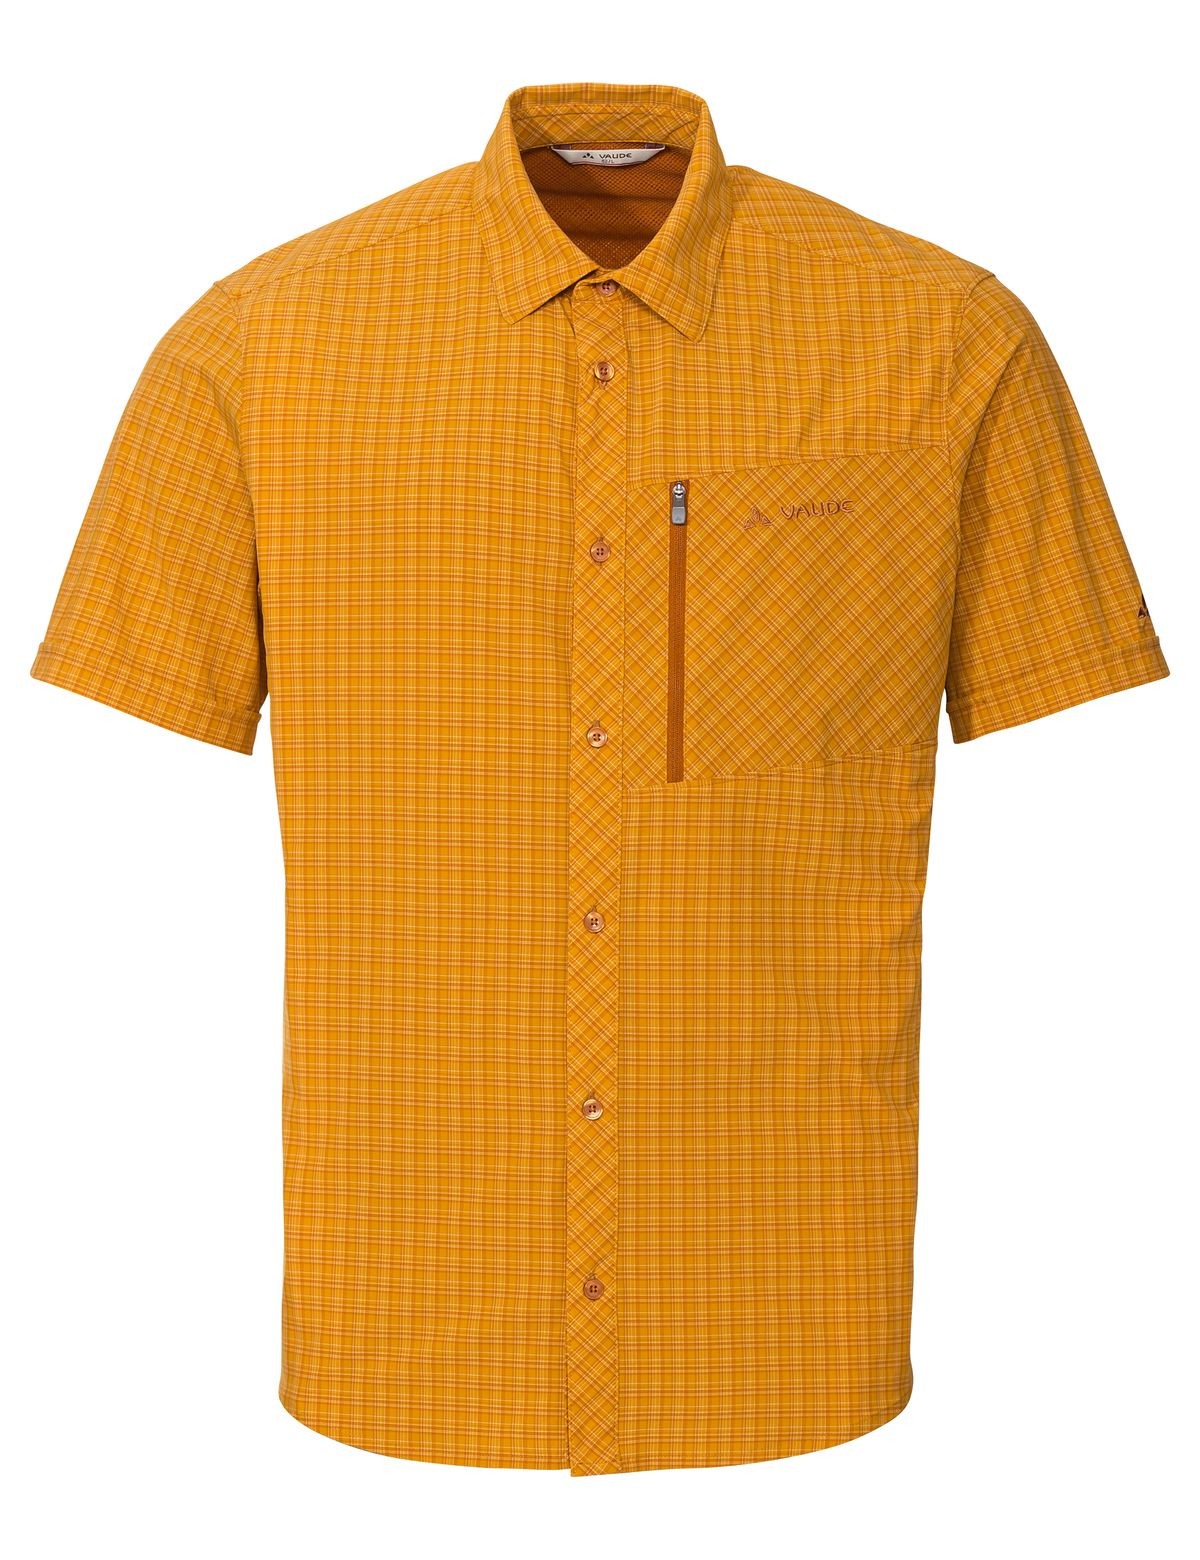 Seiland S/S Shirt, burnt yellow